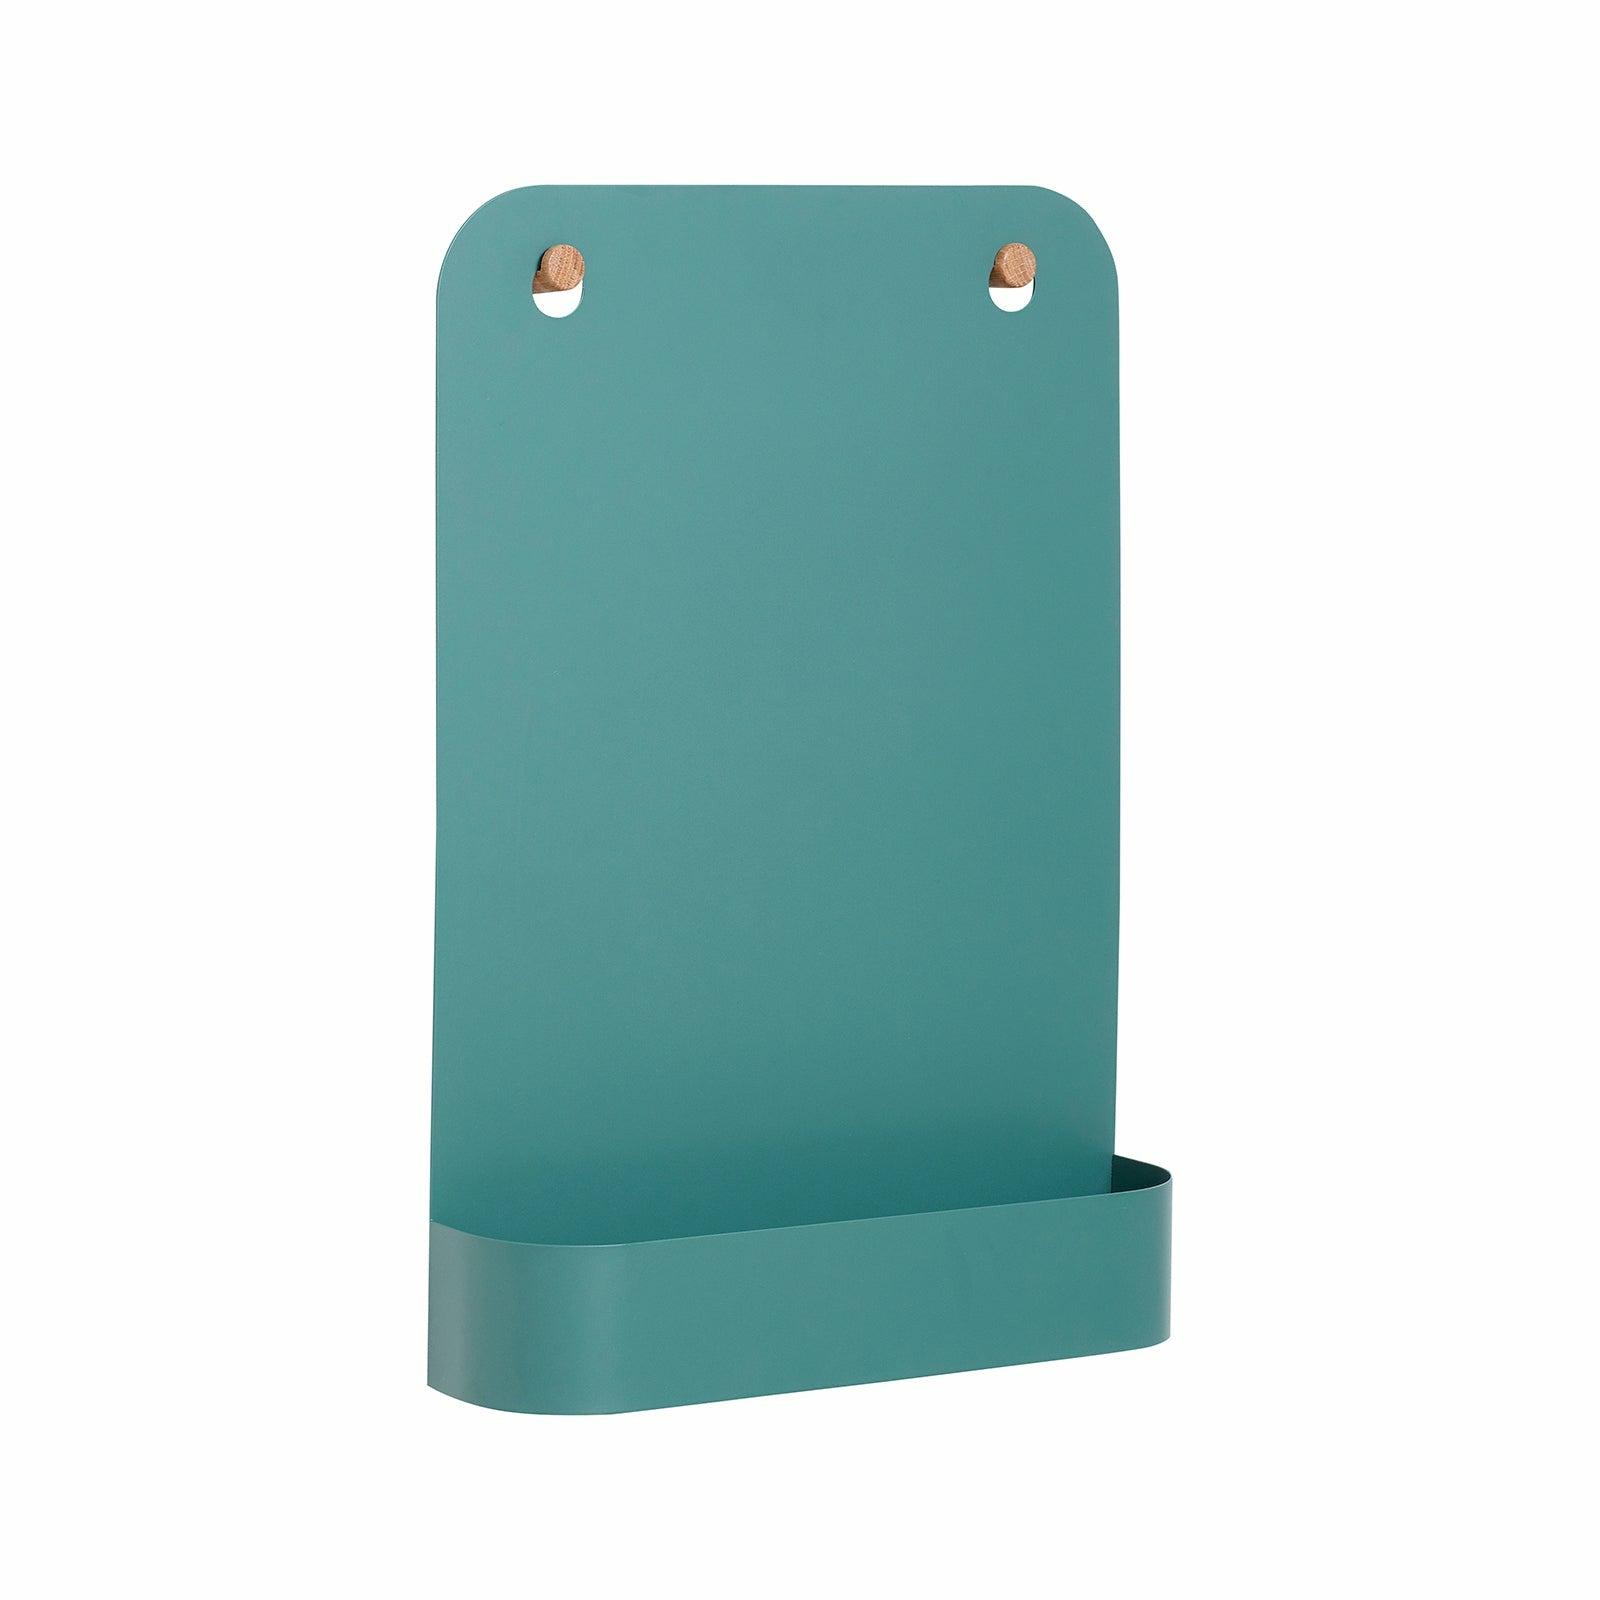 Hübsch - Board med/kroker, metall/tre, grønt - 35x8xh50 cm